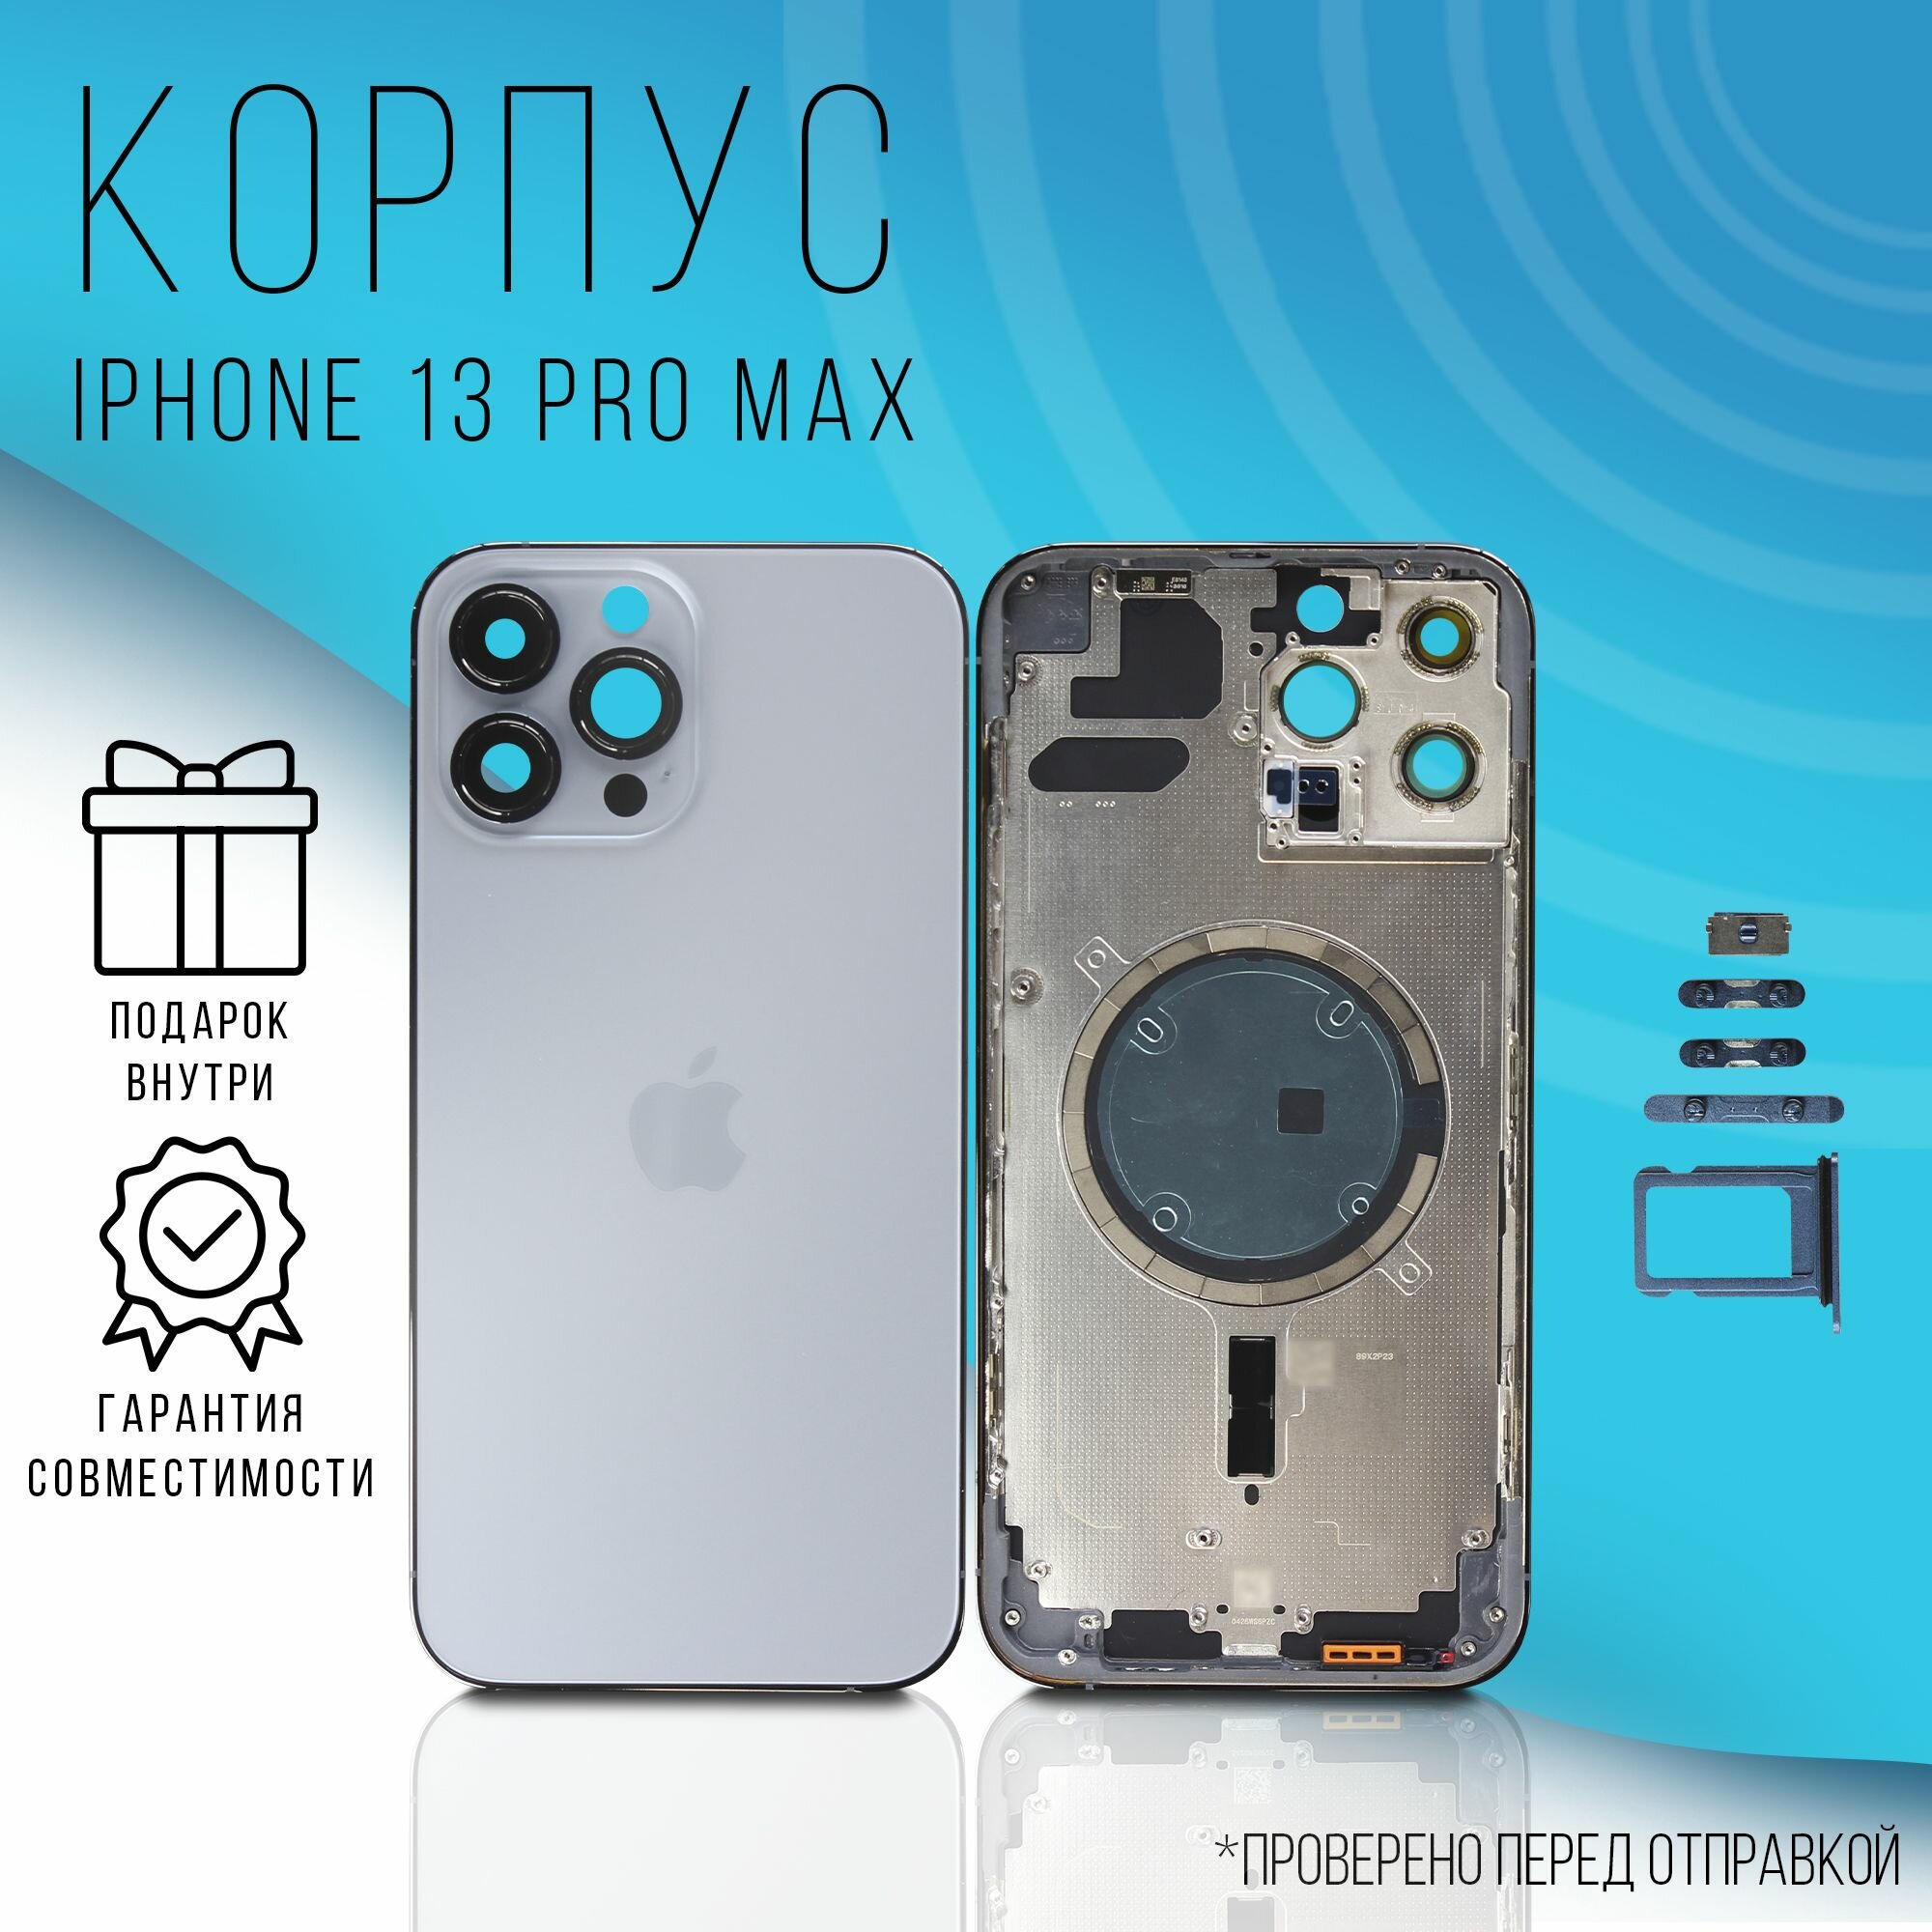 Корпус iPhone 13 Pro Max (Sierra Blue) + монтажные проклейки